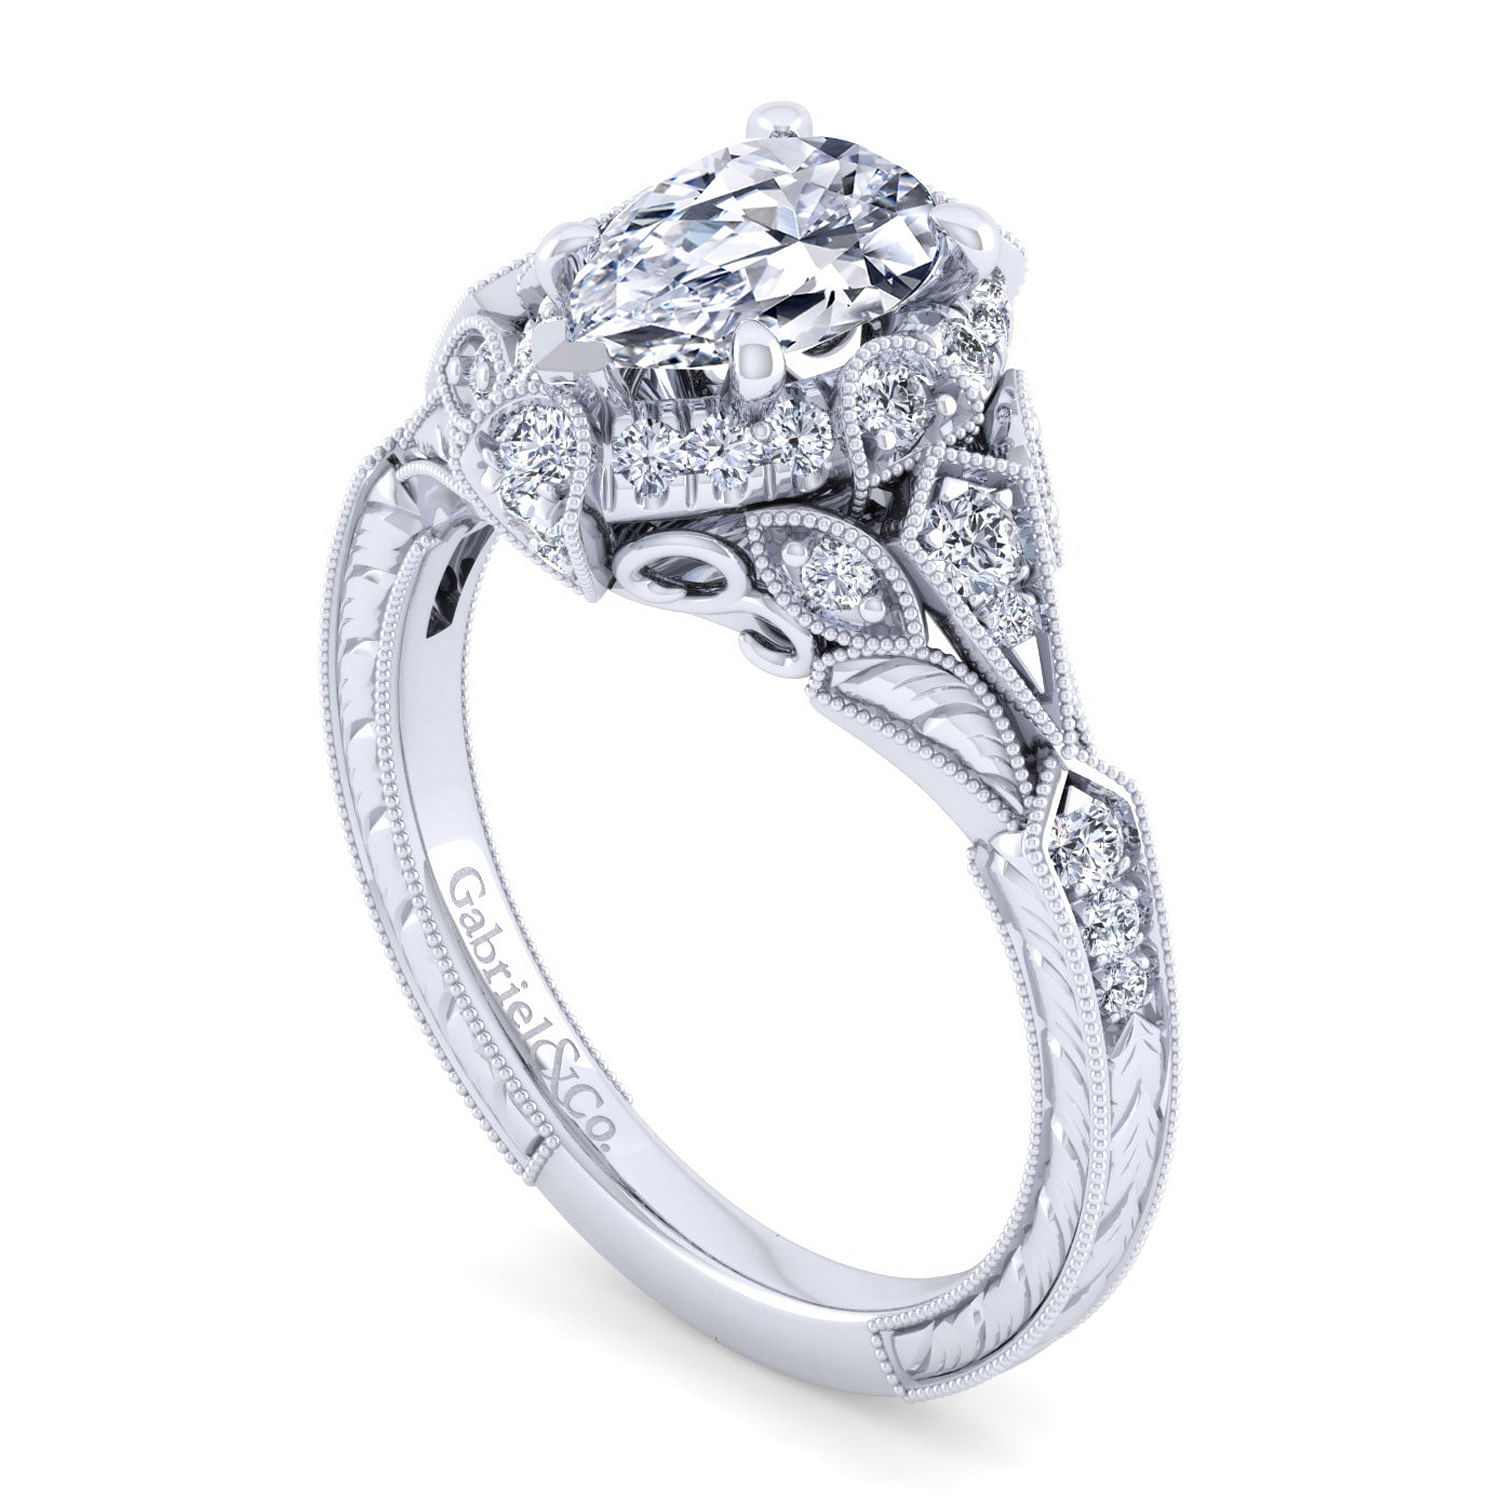 Unique 14K White Gold Vintage Inspired Pear Shape Diamond Halo Engagement Ring